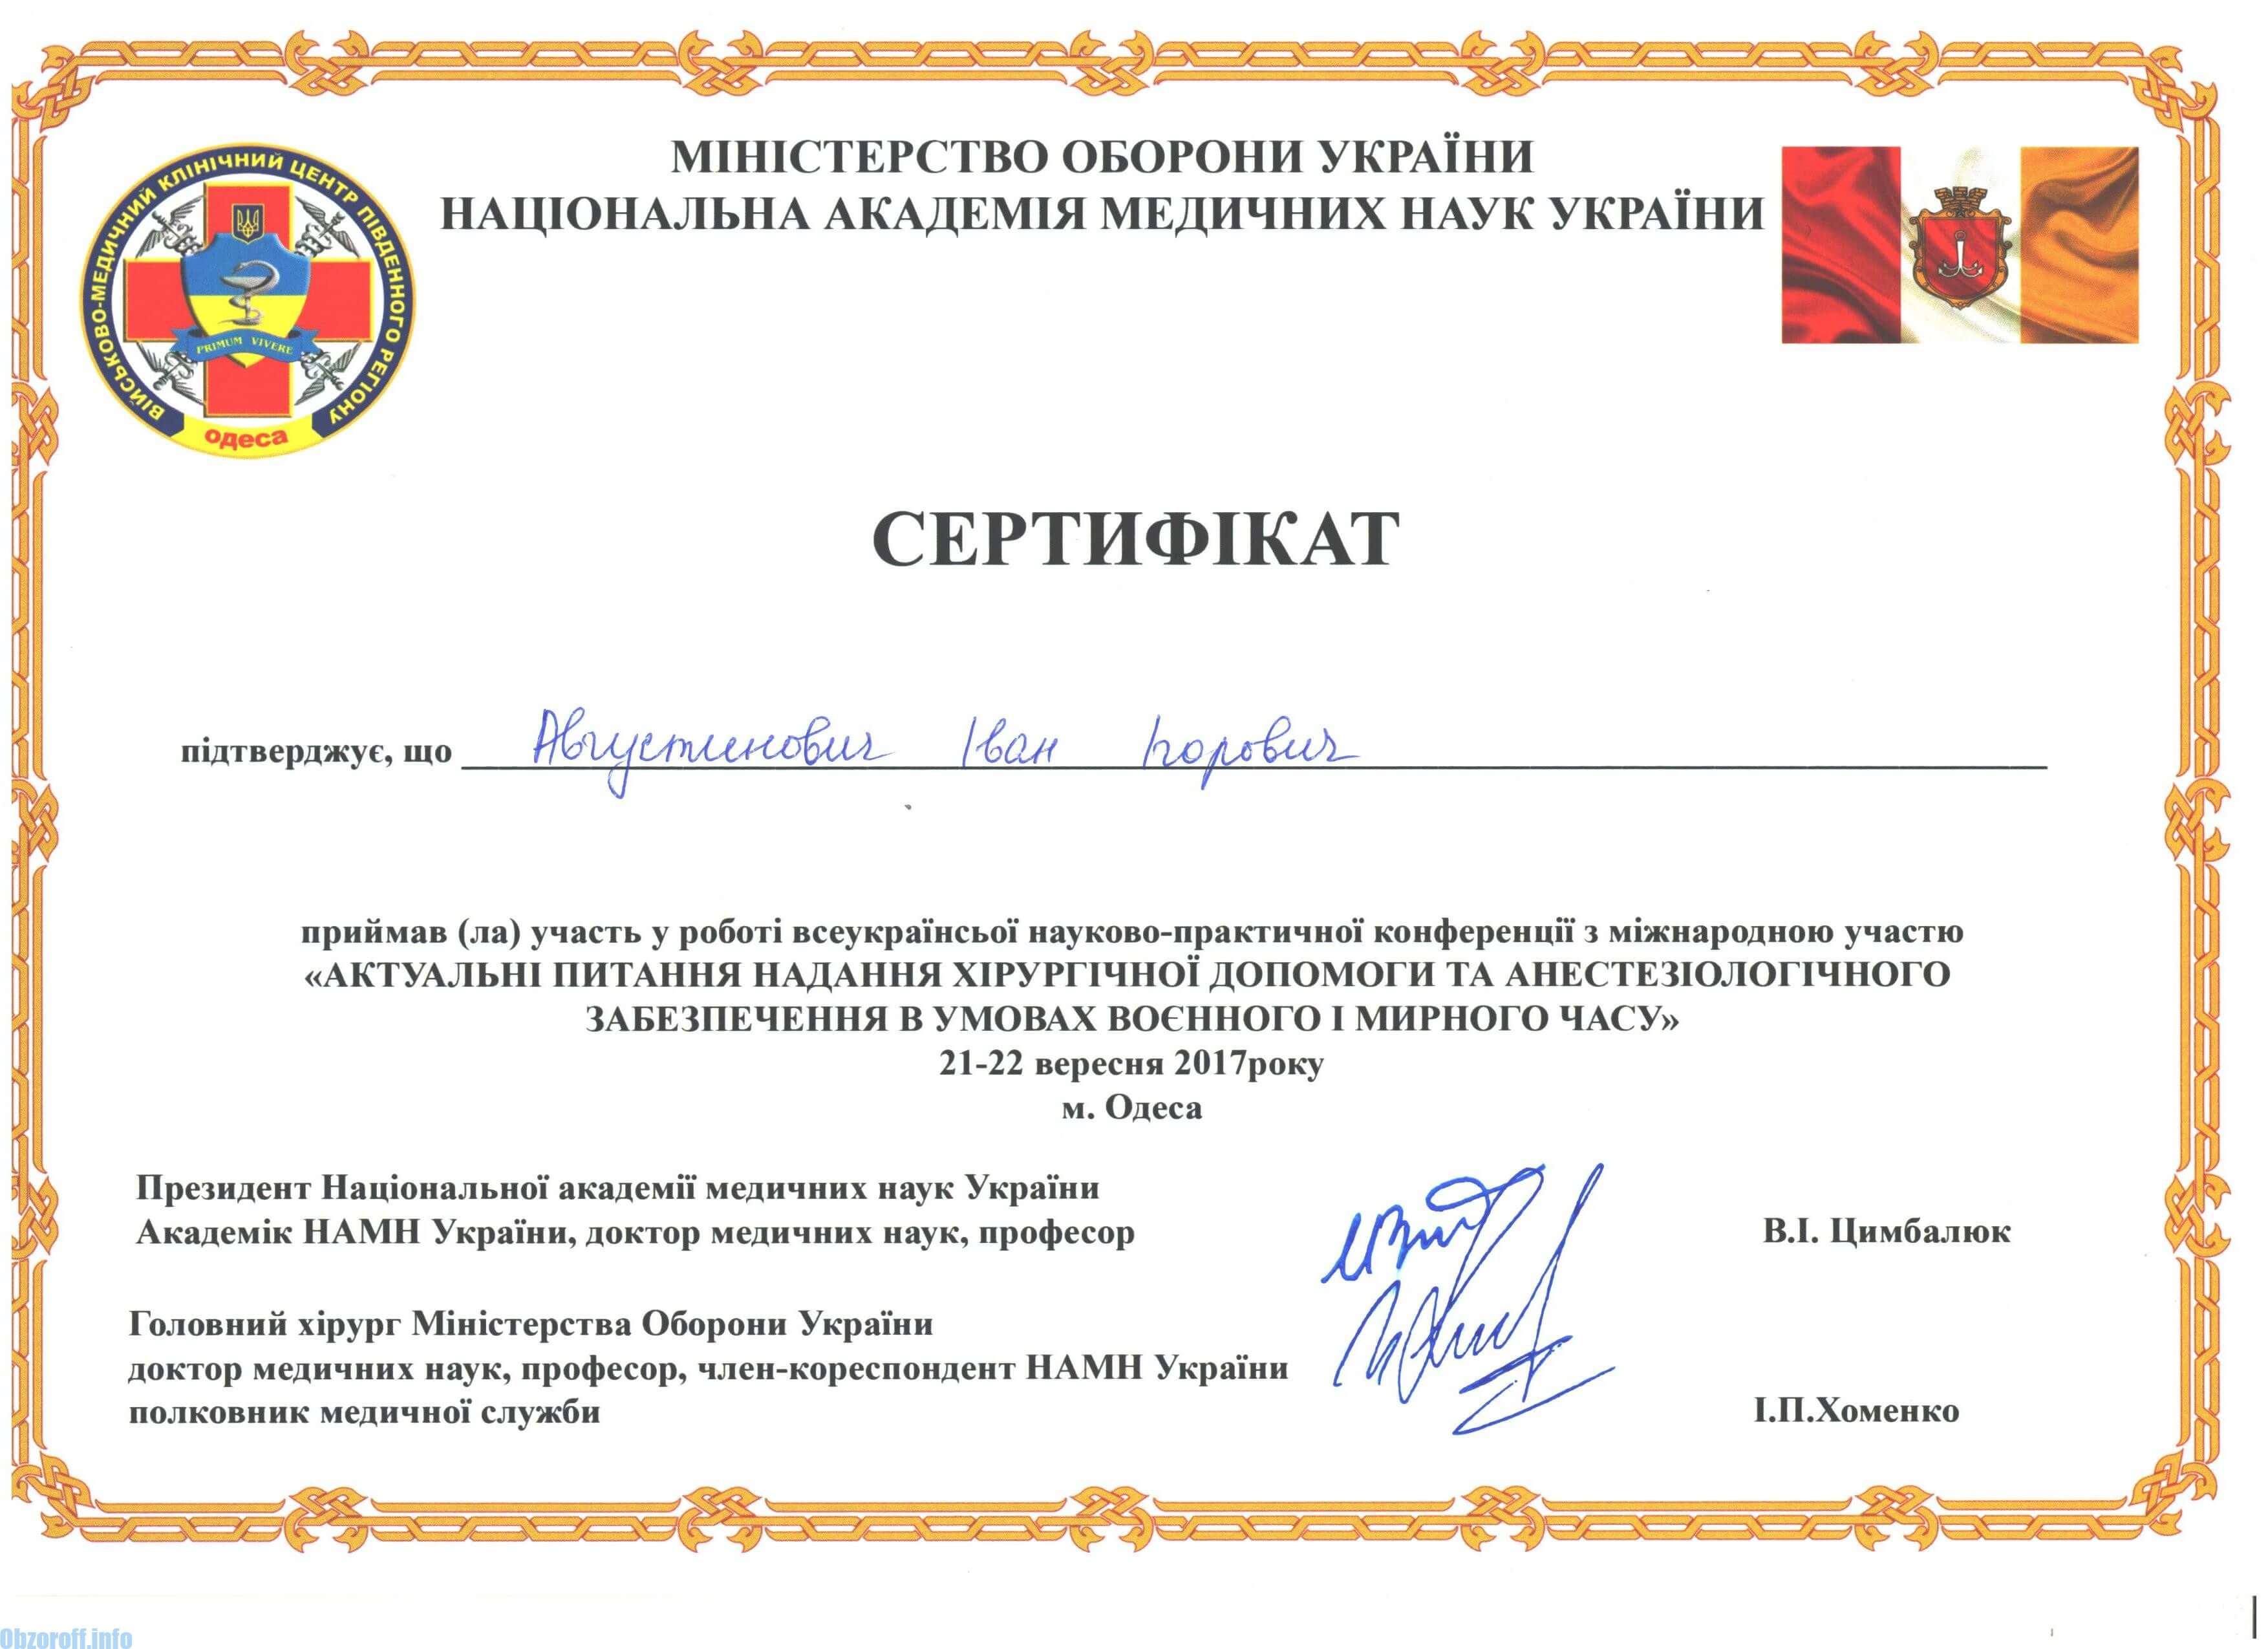 Сертификат врача хирурга в конференции